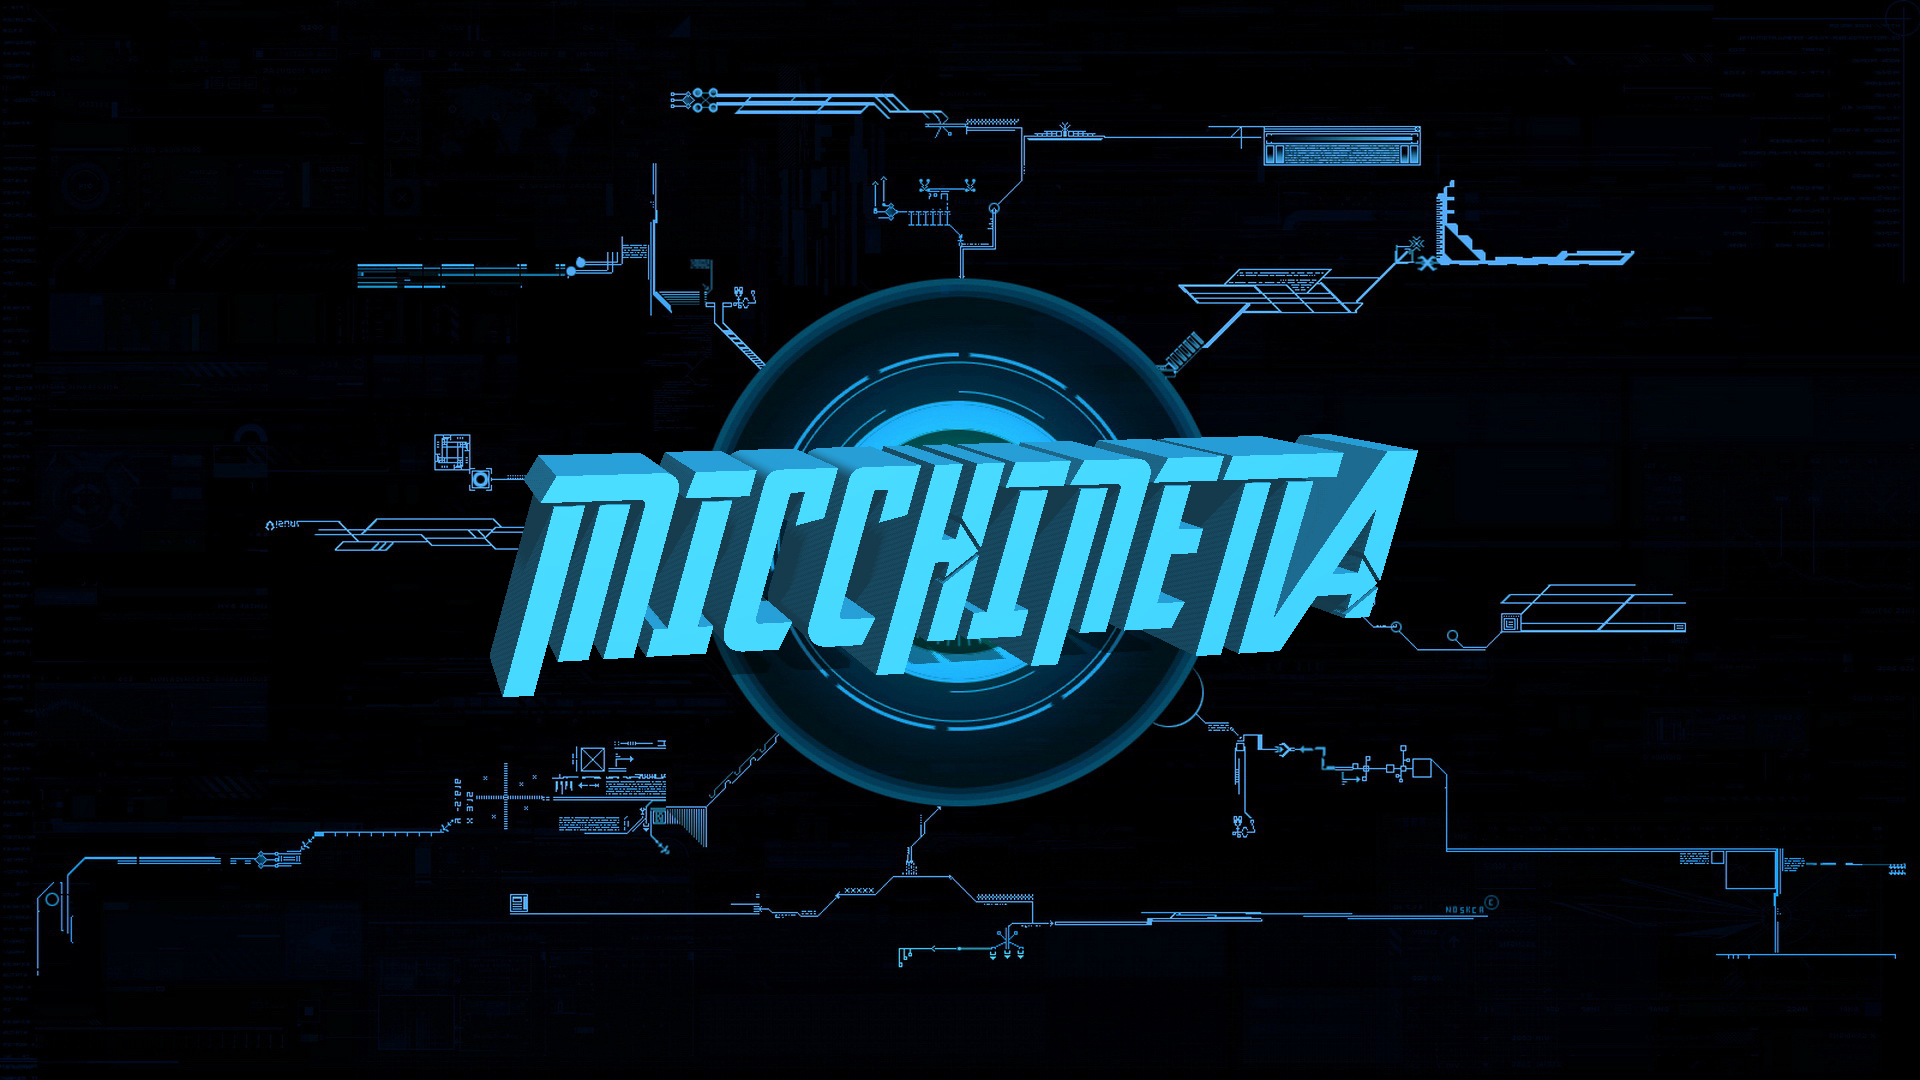 logo_micchinetta.jpg